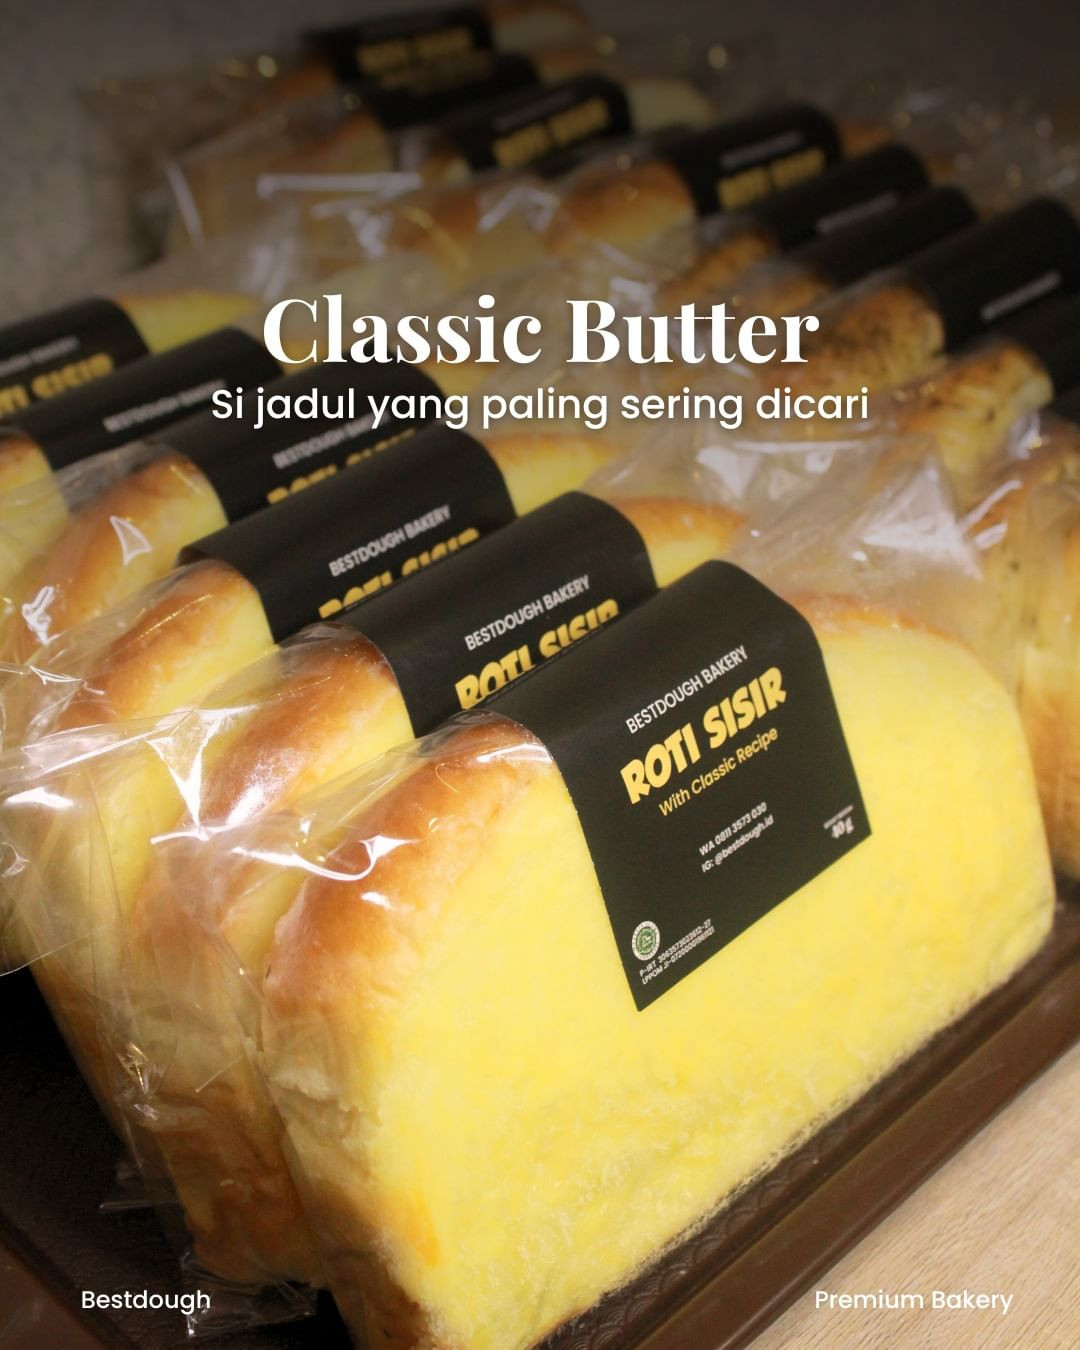 Classic Butter